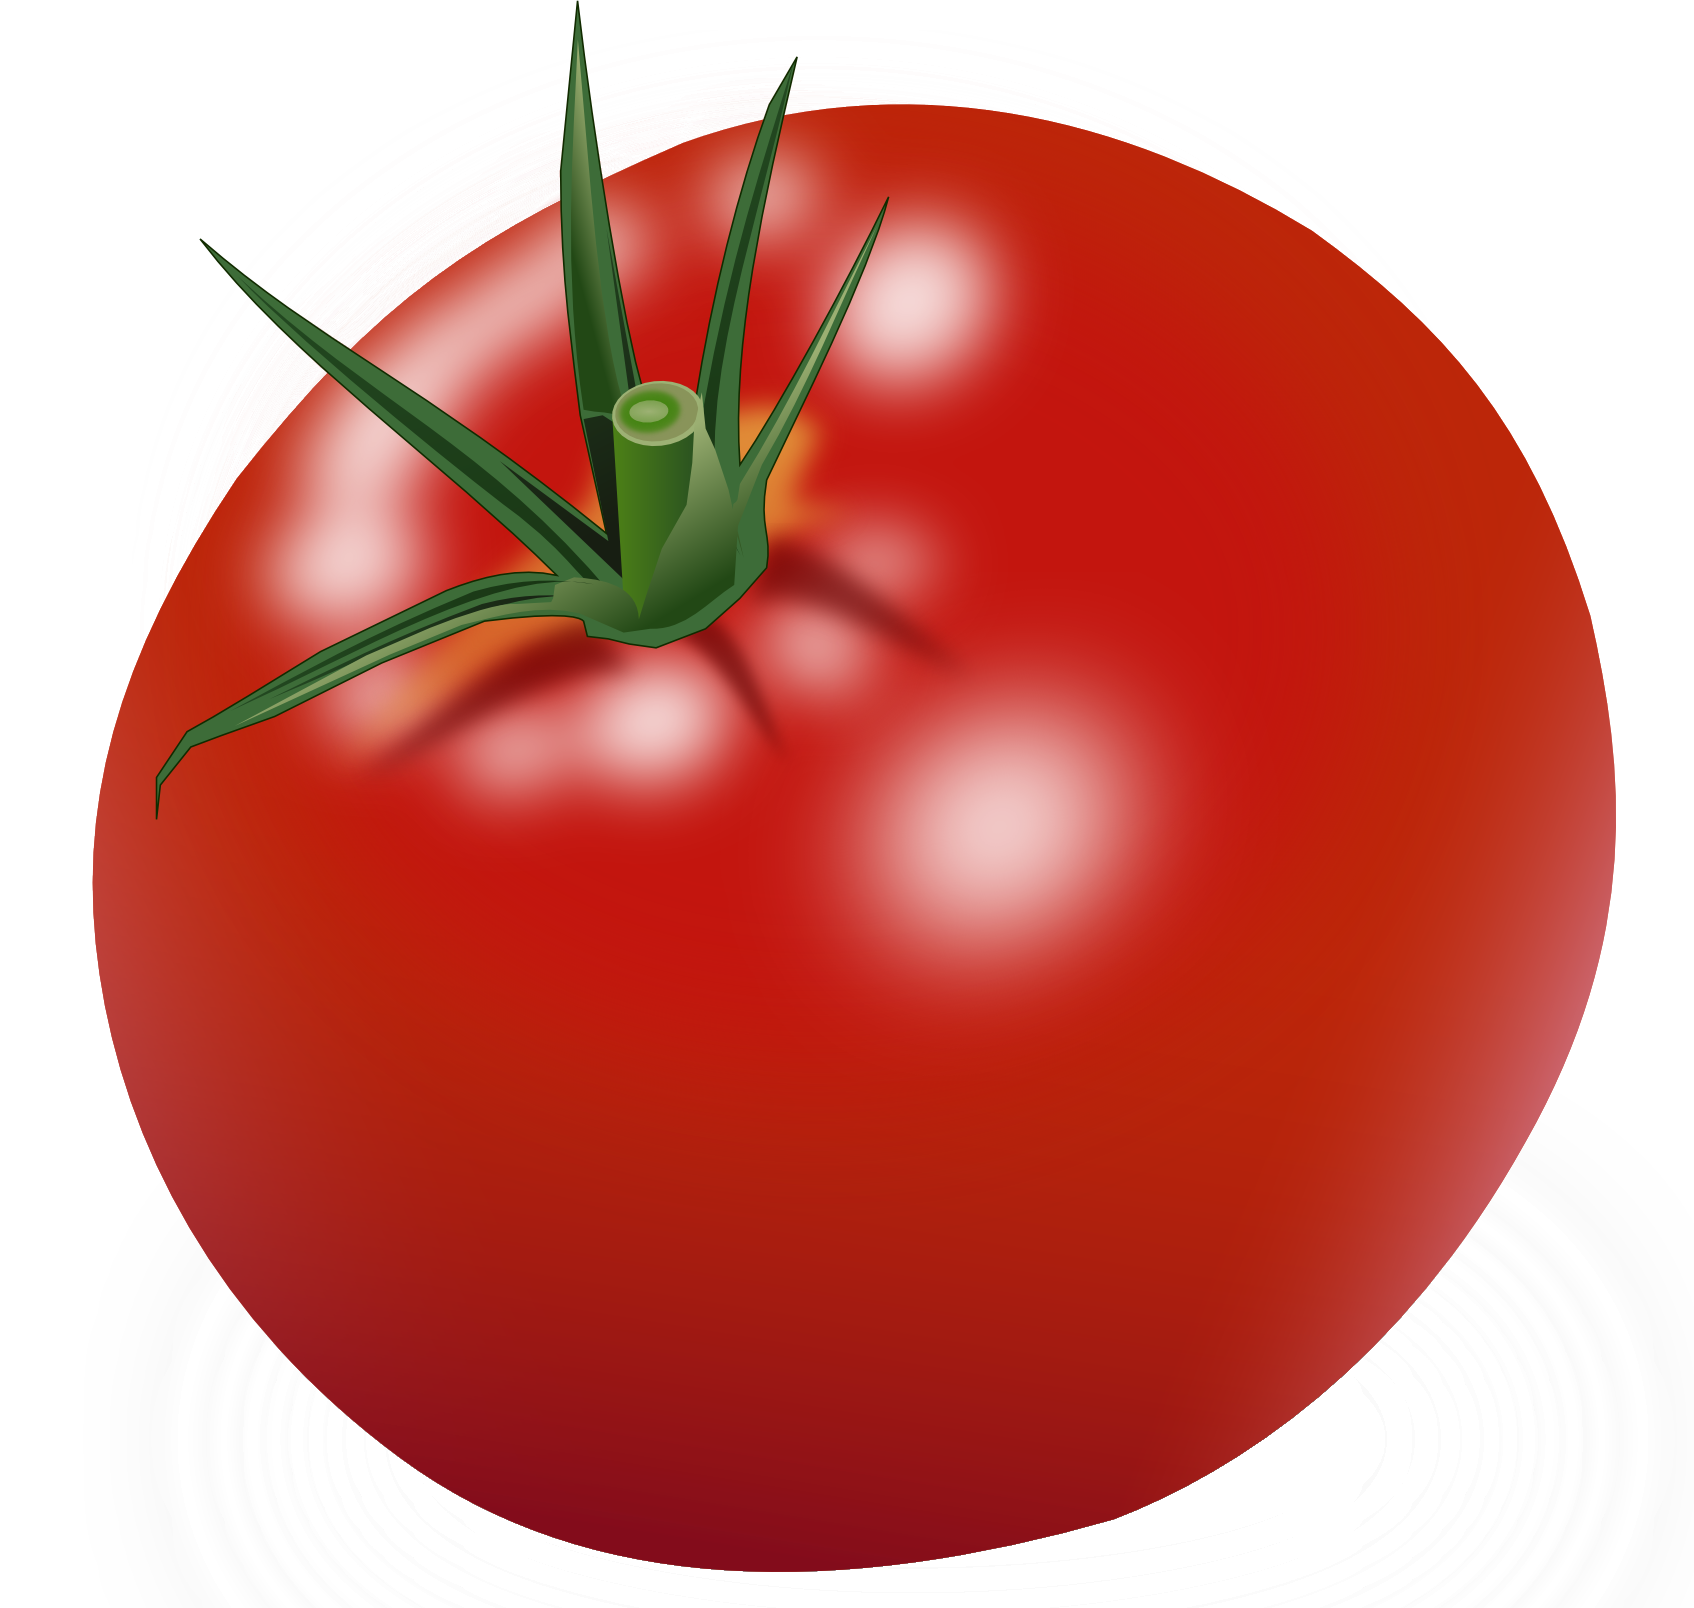 Große rote Tomate